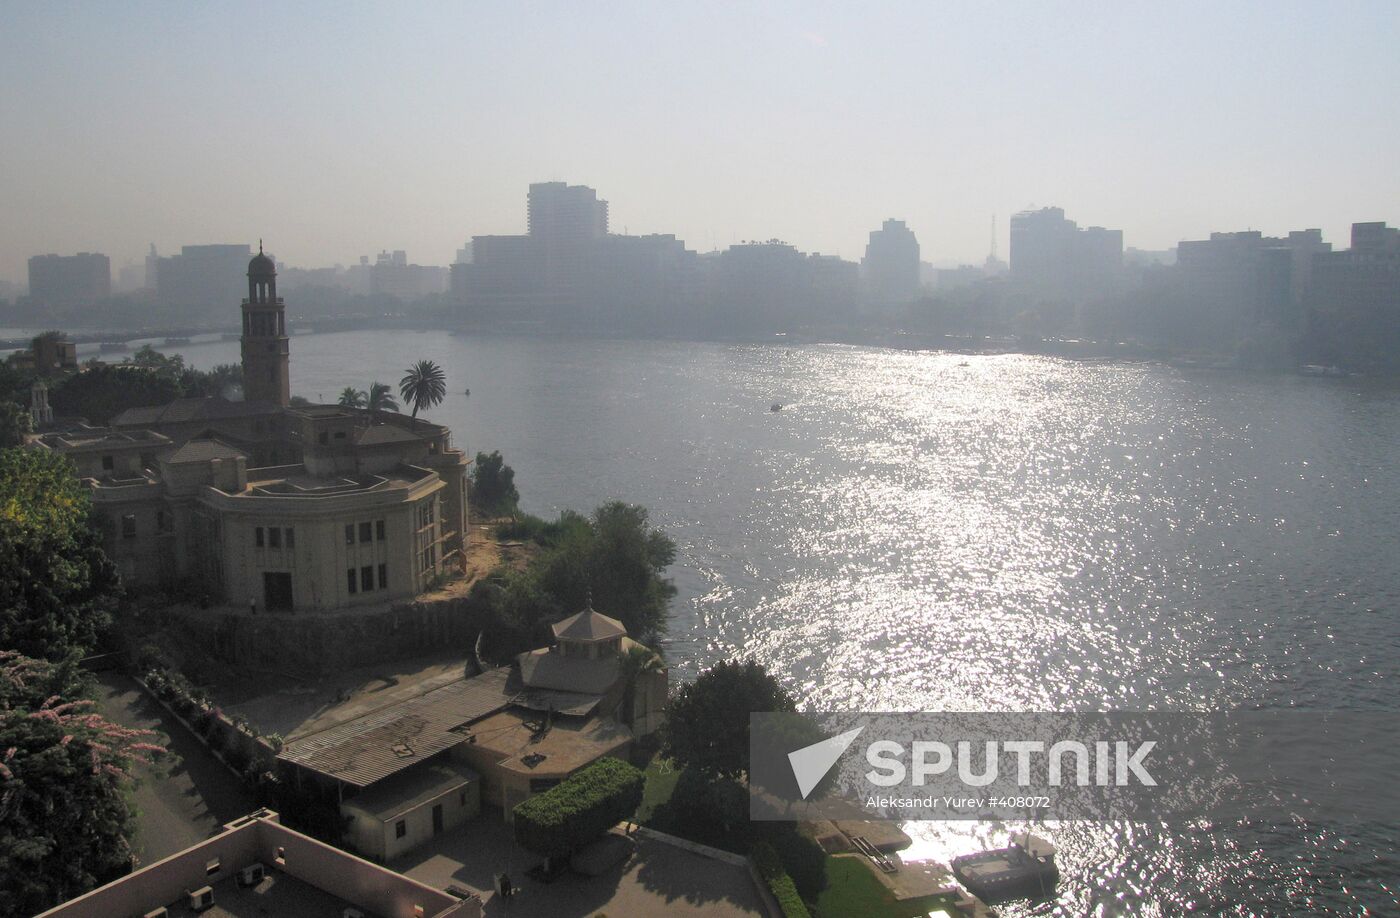 Views of Cairo